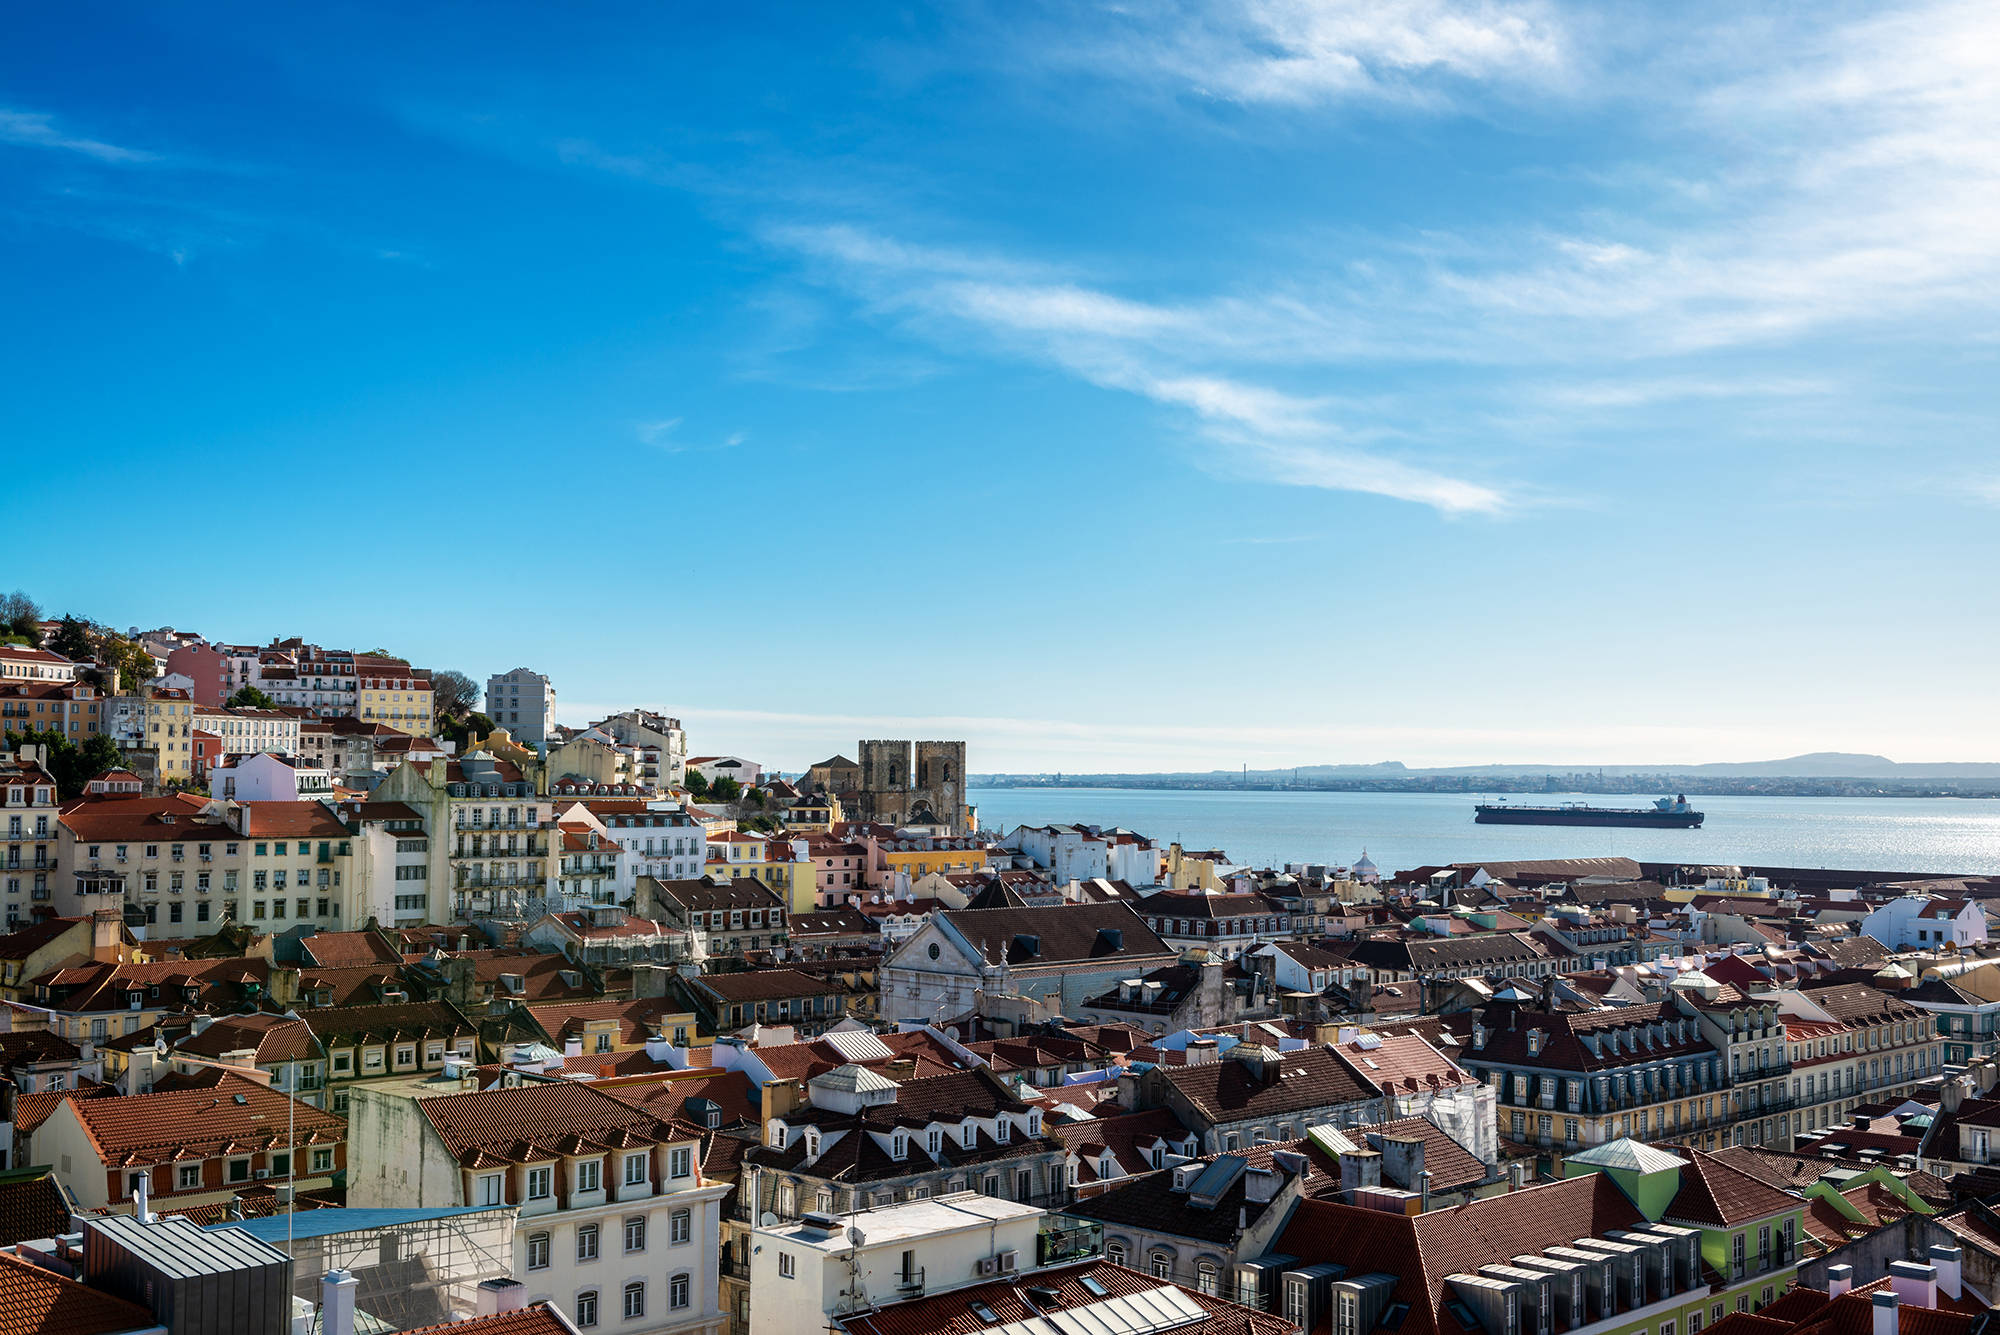 Skyline of Alfama in Lisbon